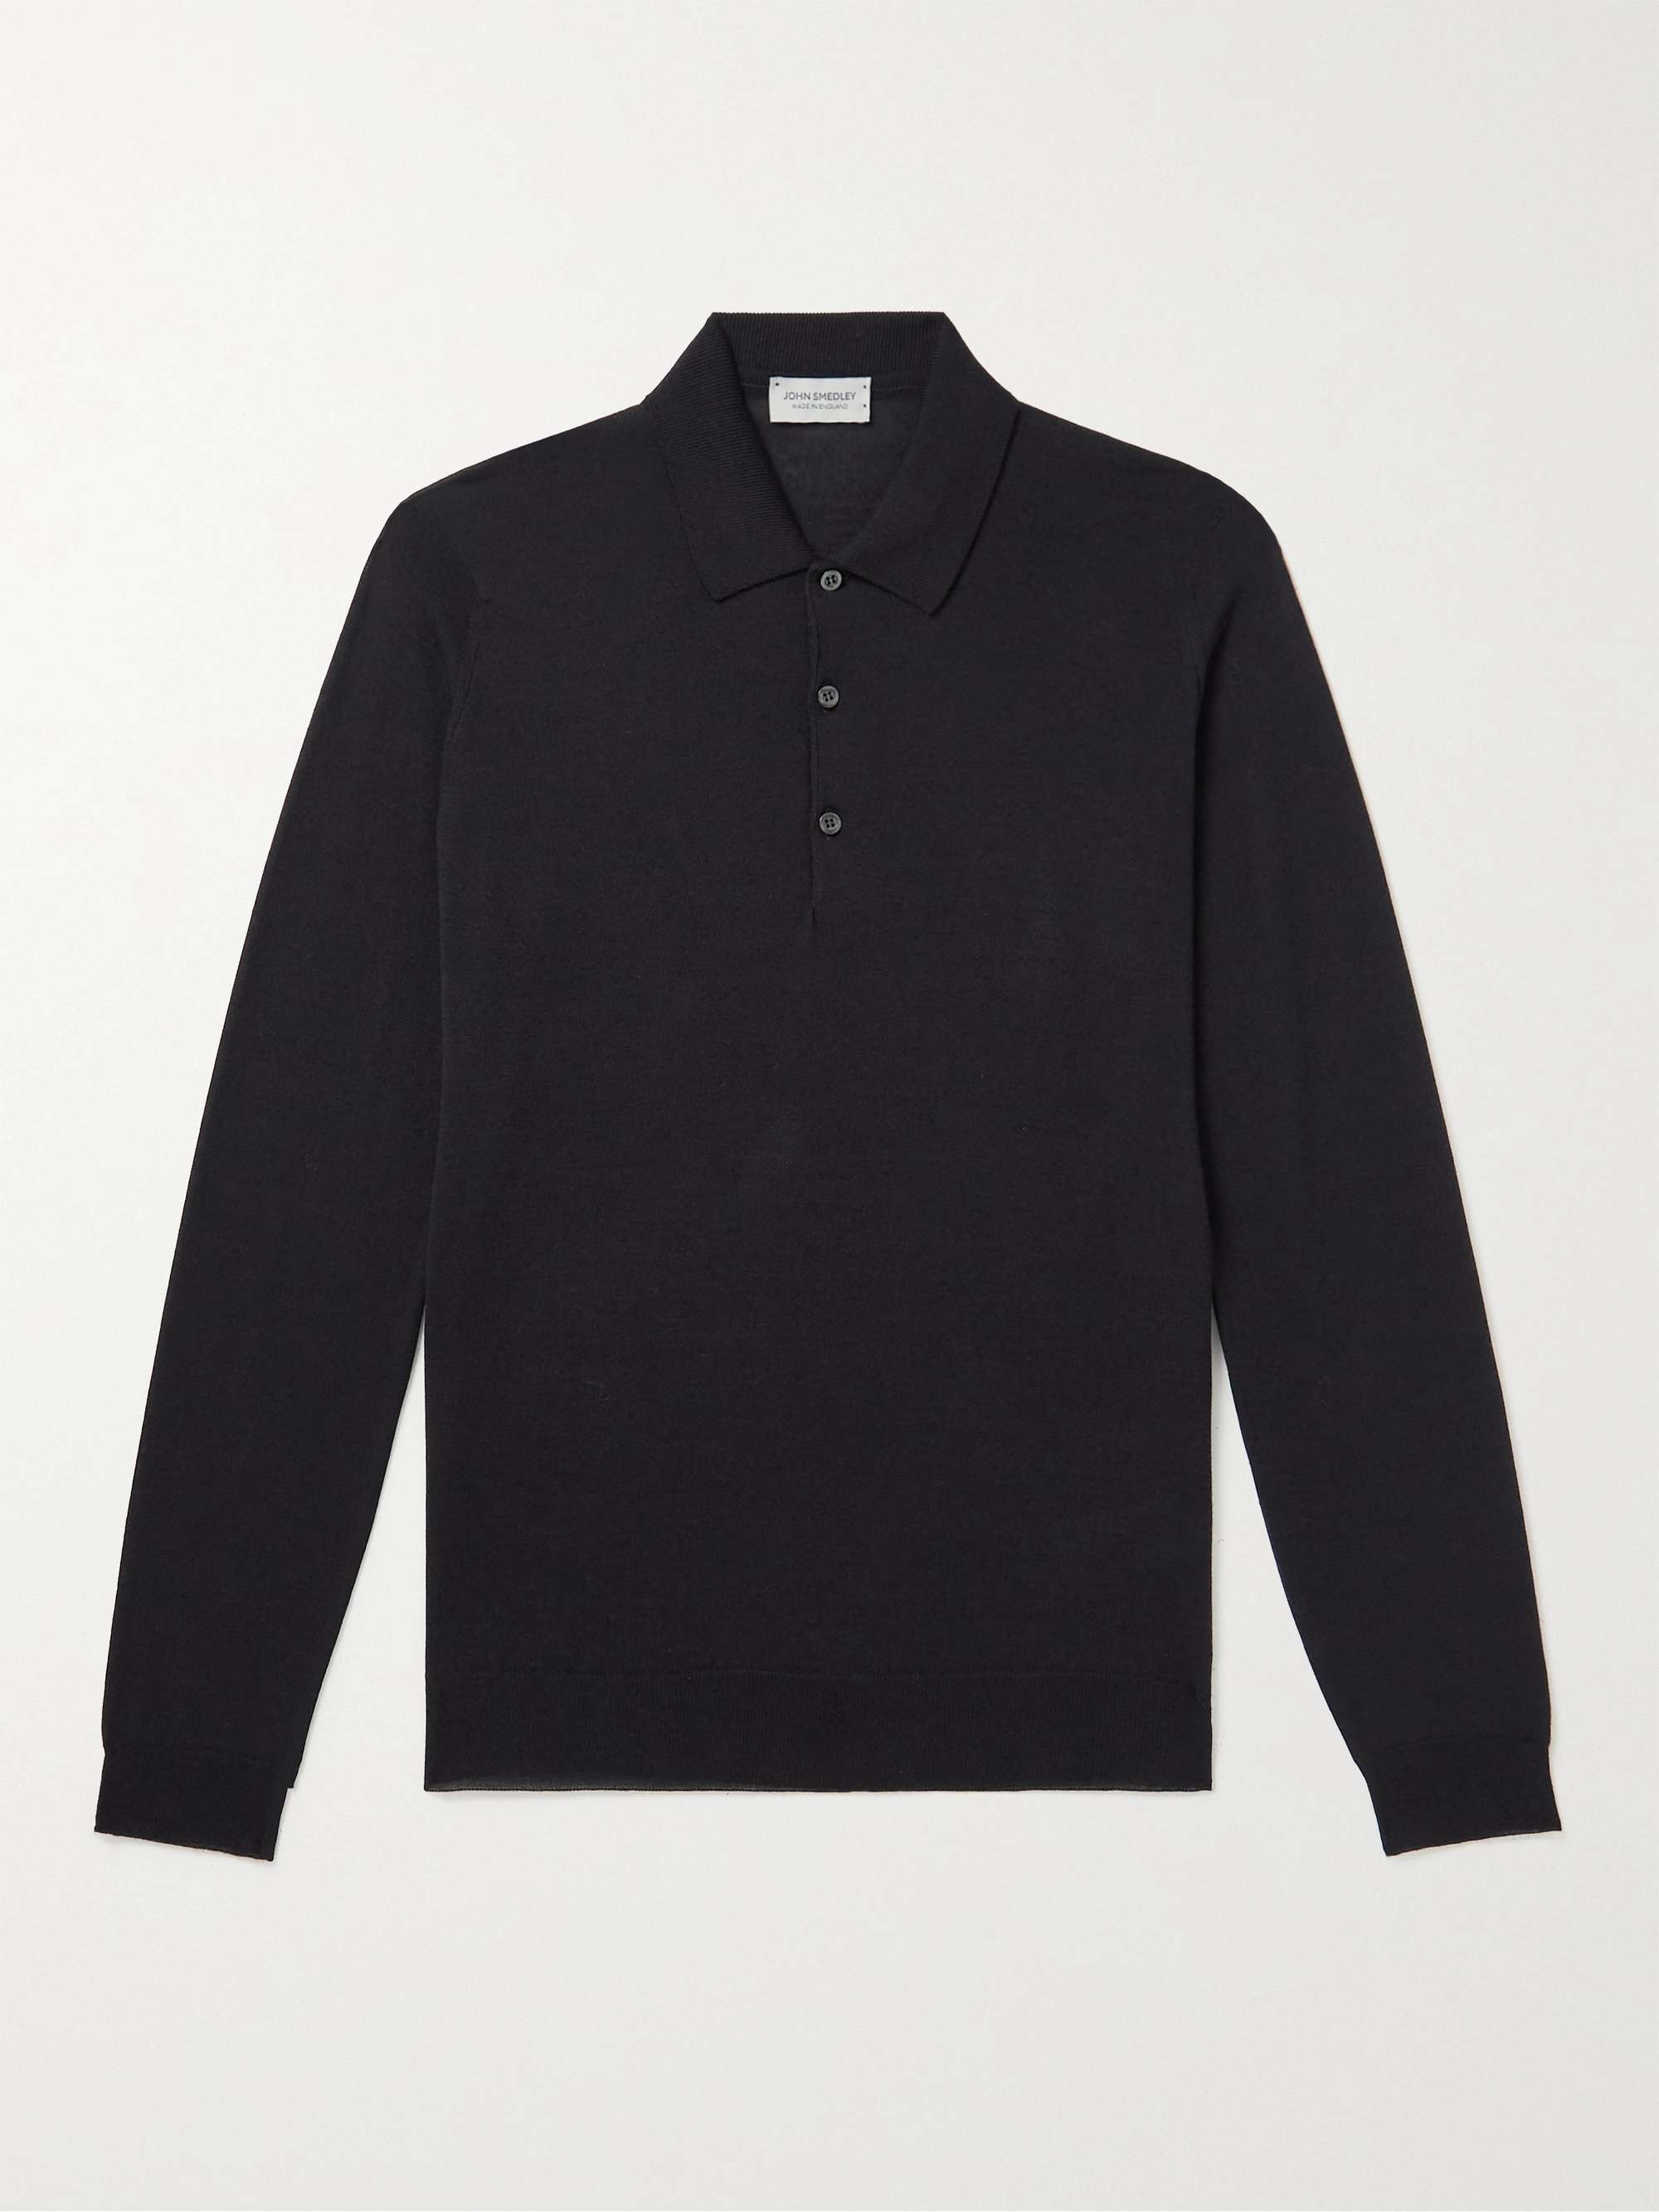 JOHN SMEDLEY Belper Slim-Fit Wool and Cotton-Blend Polo Shirt